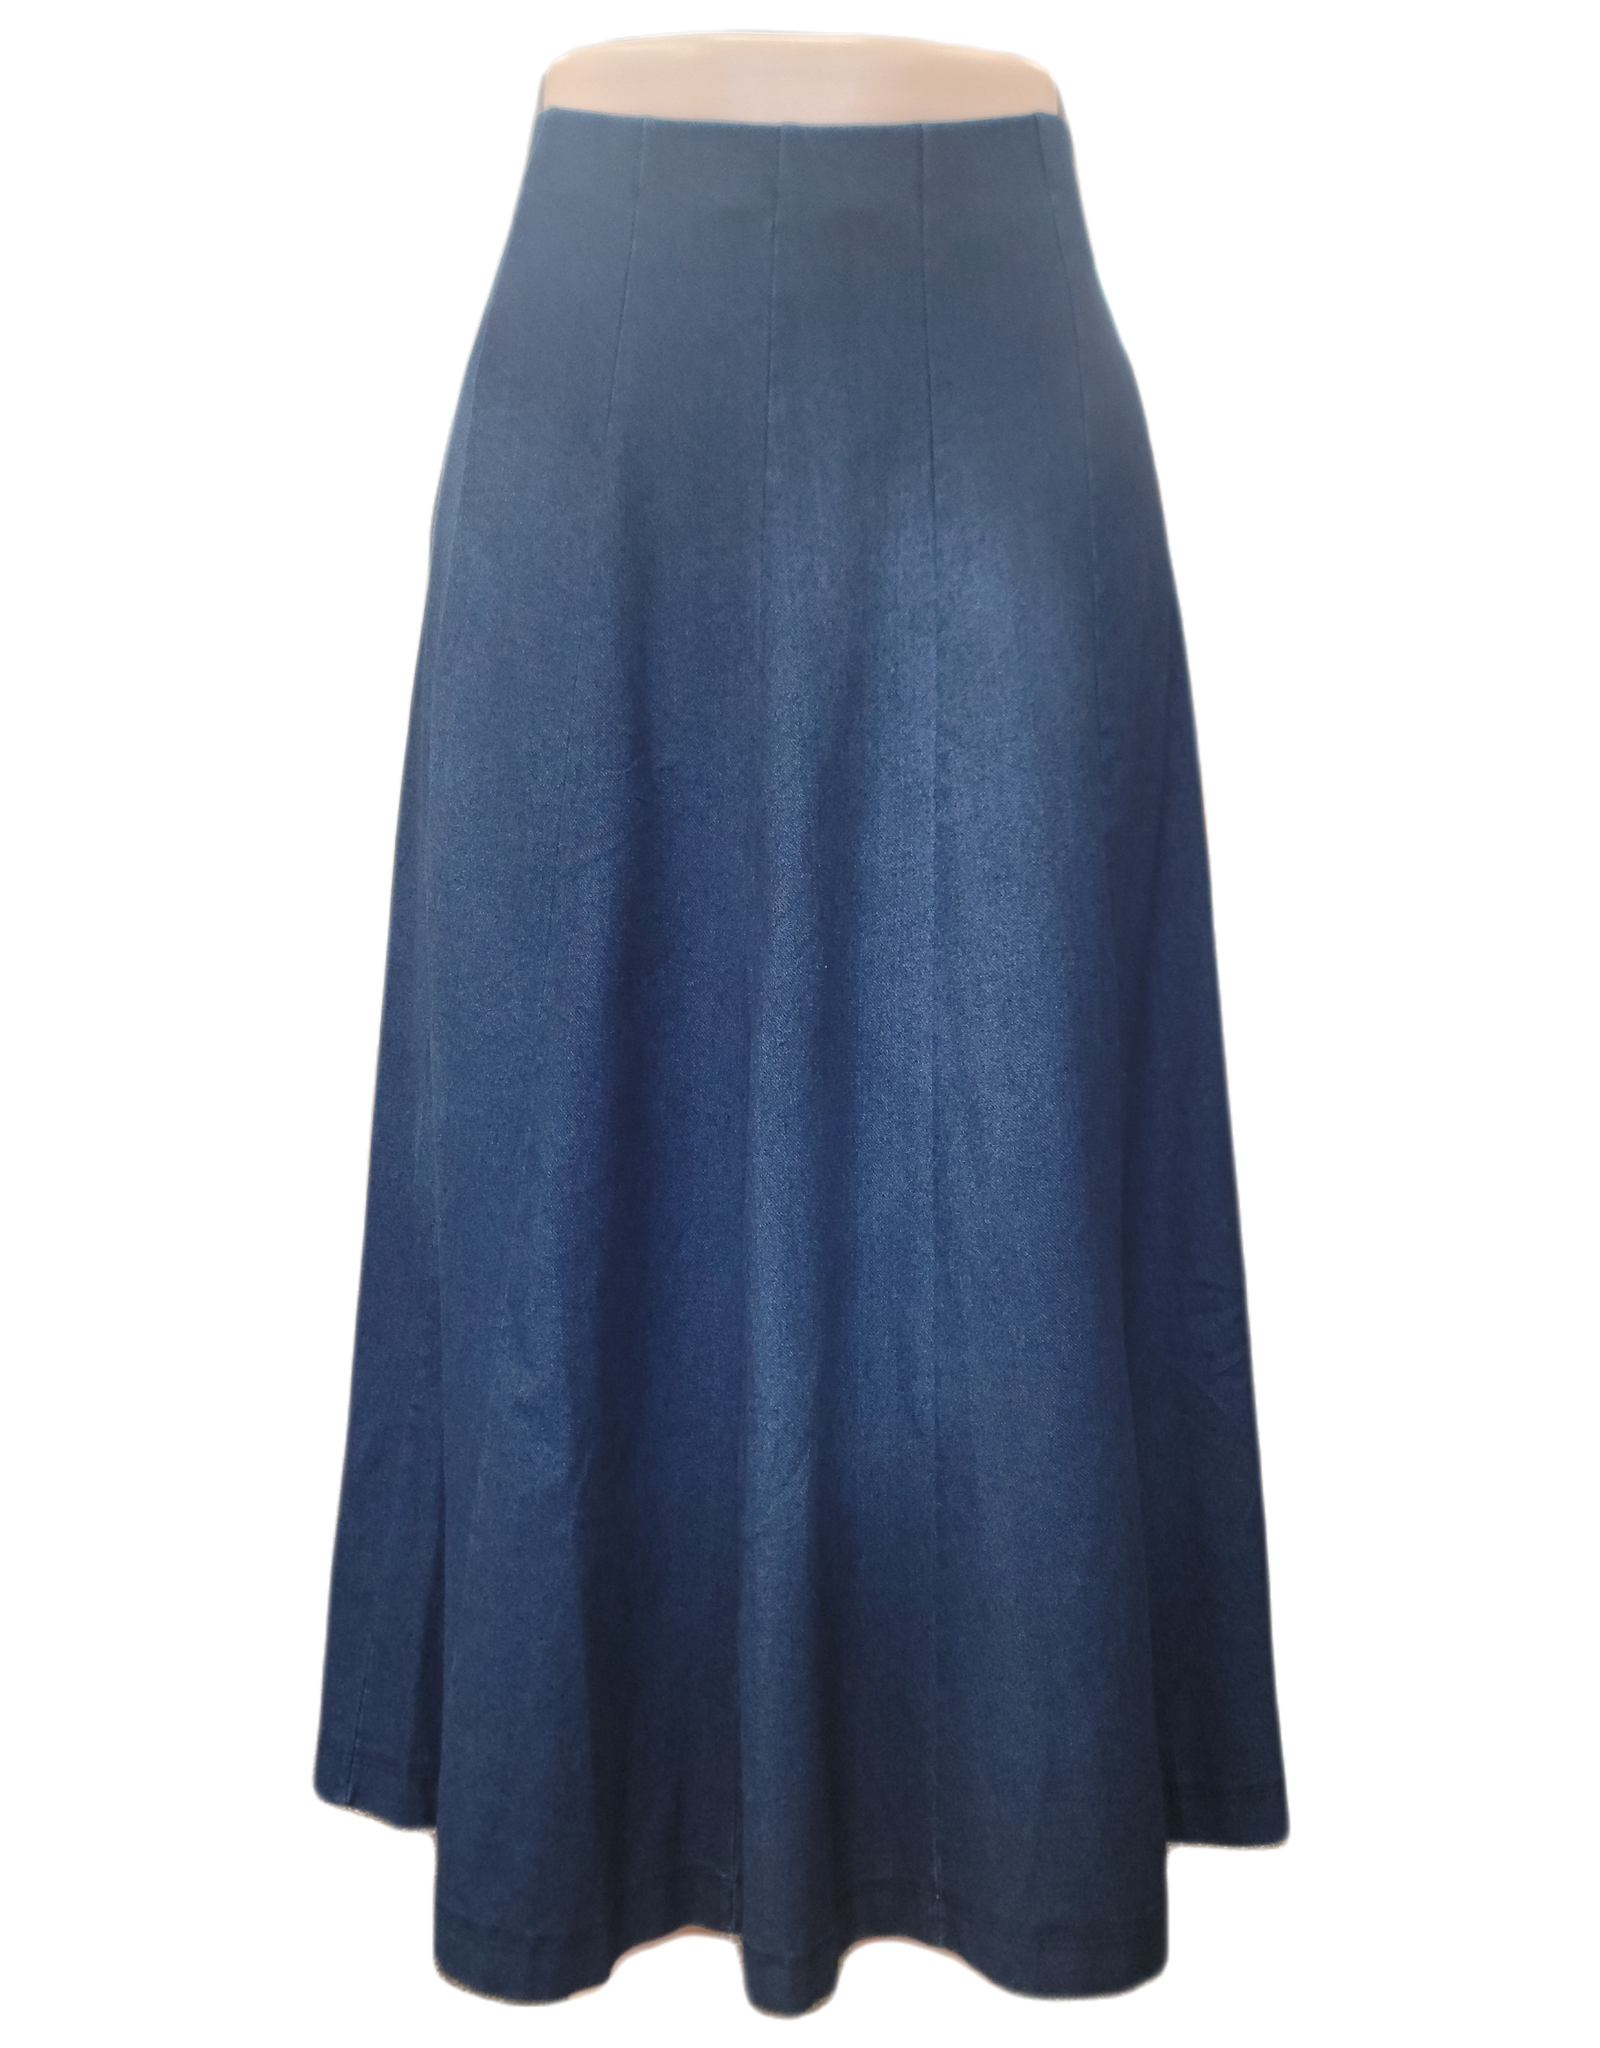 Kiki Riki Women's 32 Inch Panel Denim Skirt 42609 - Sox World Plus